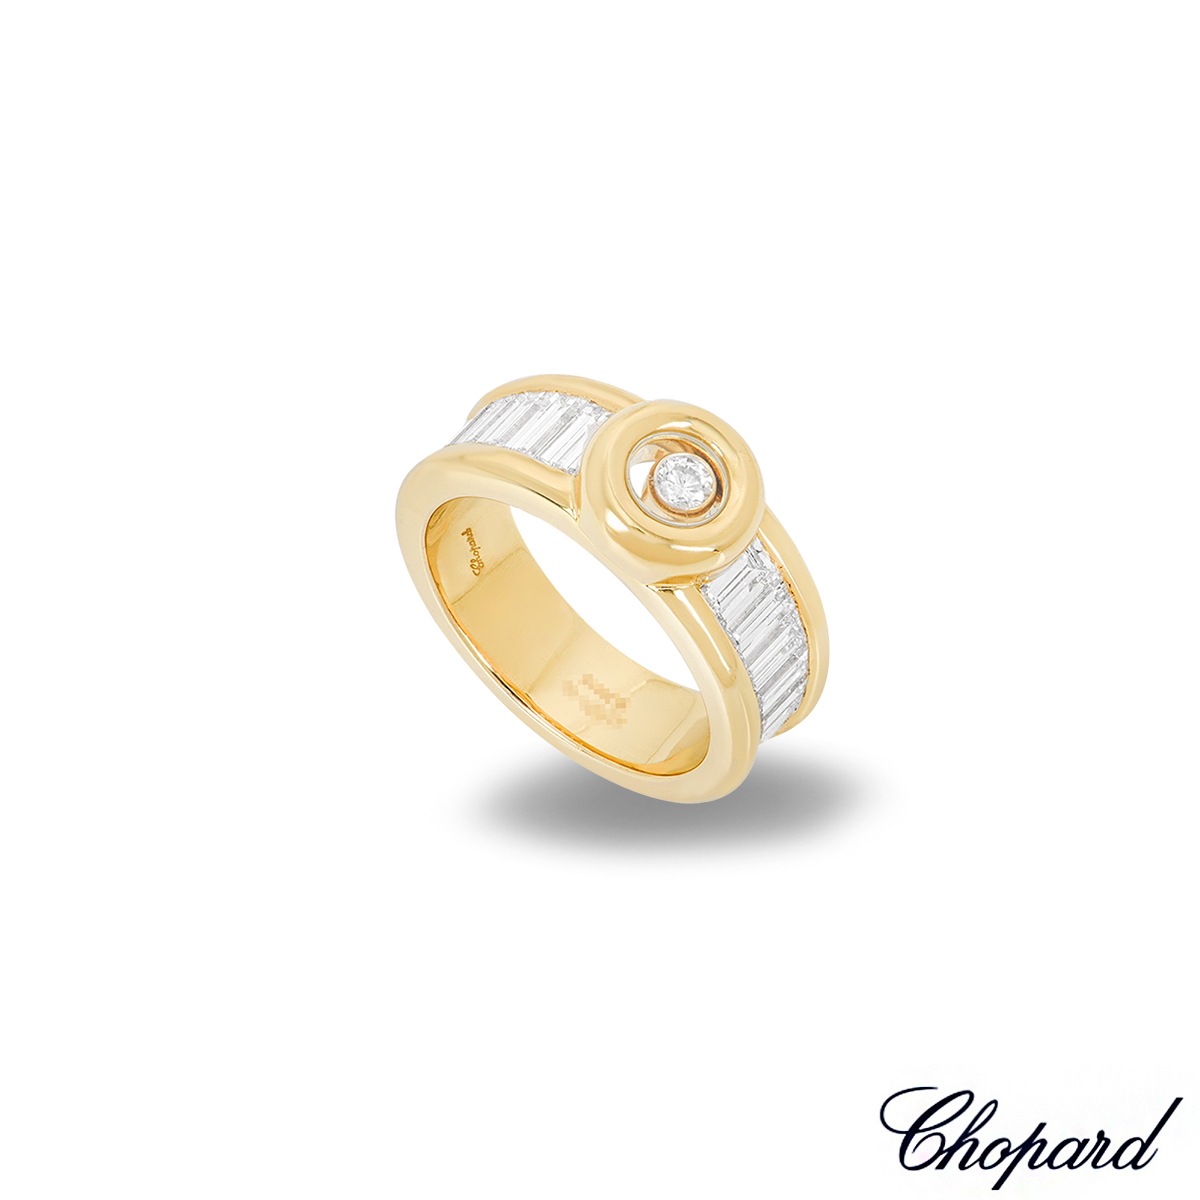 Chopard Yellow Gold Happy Diamonds Ring 82/2211-0001